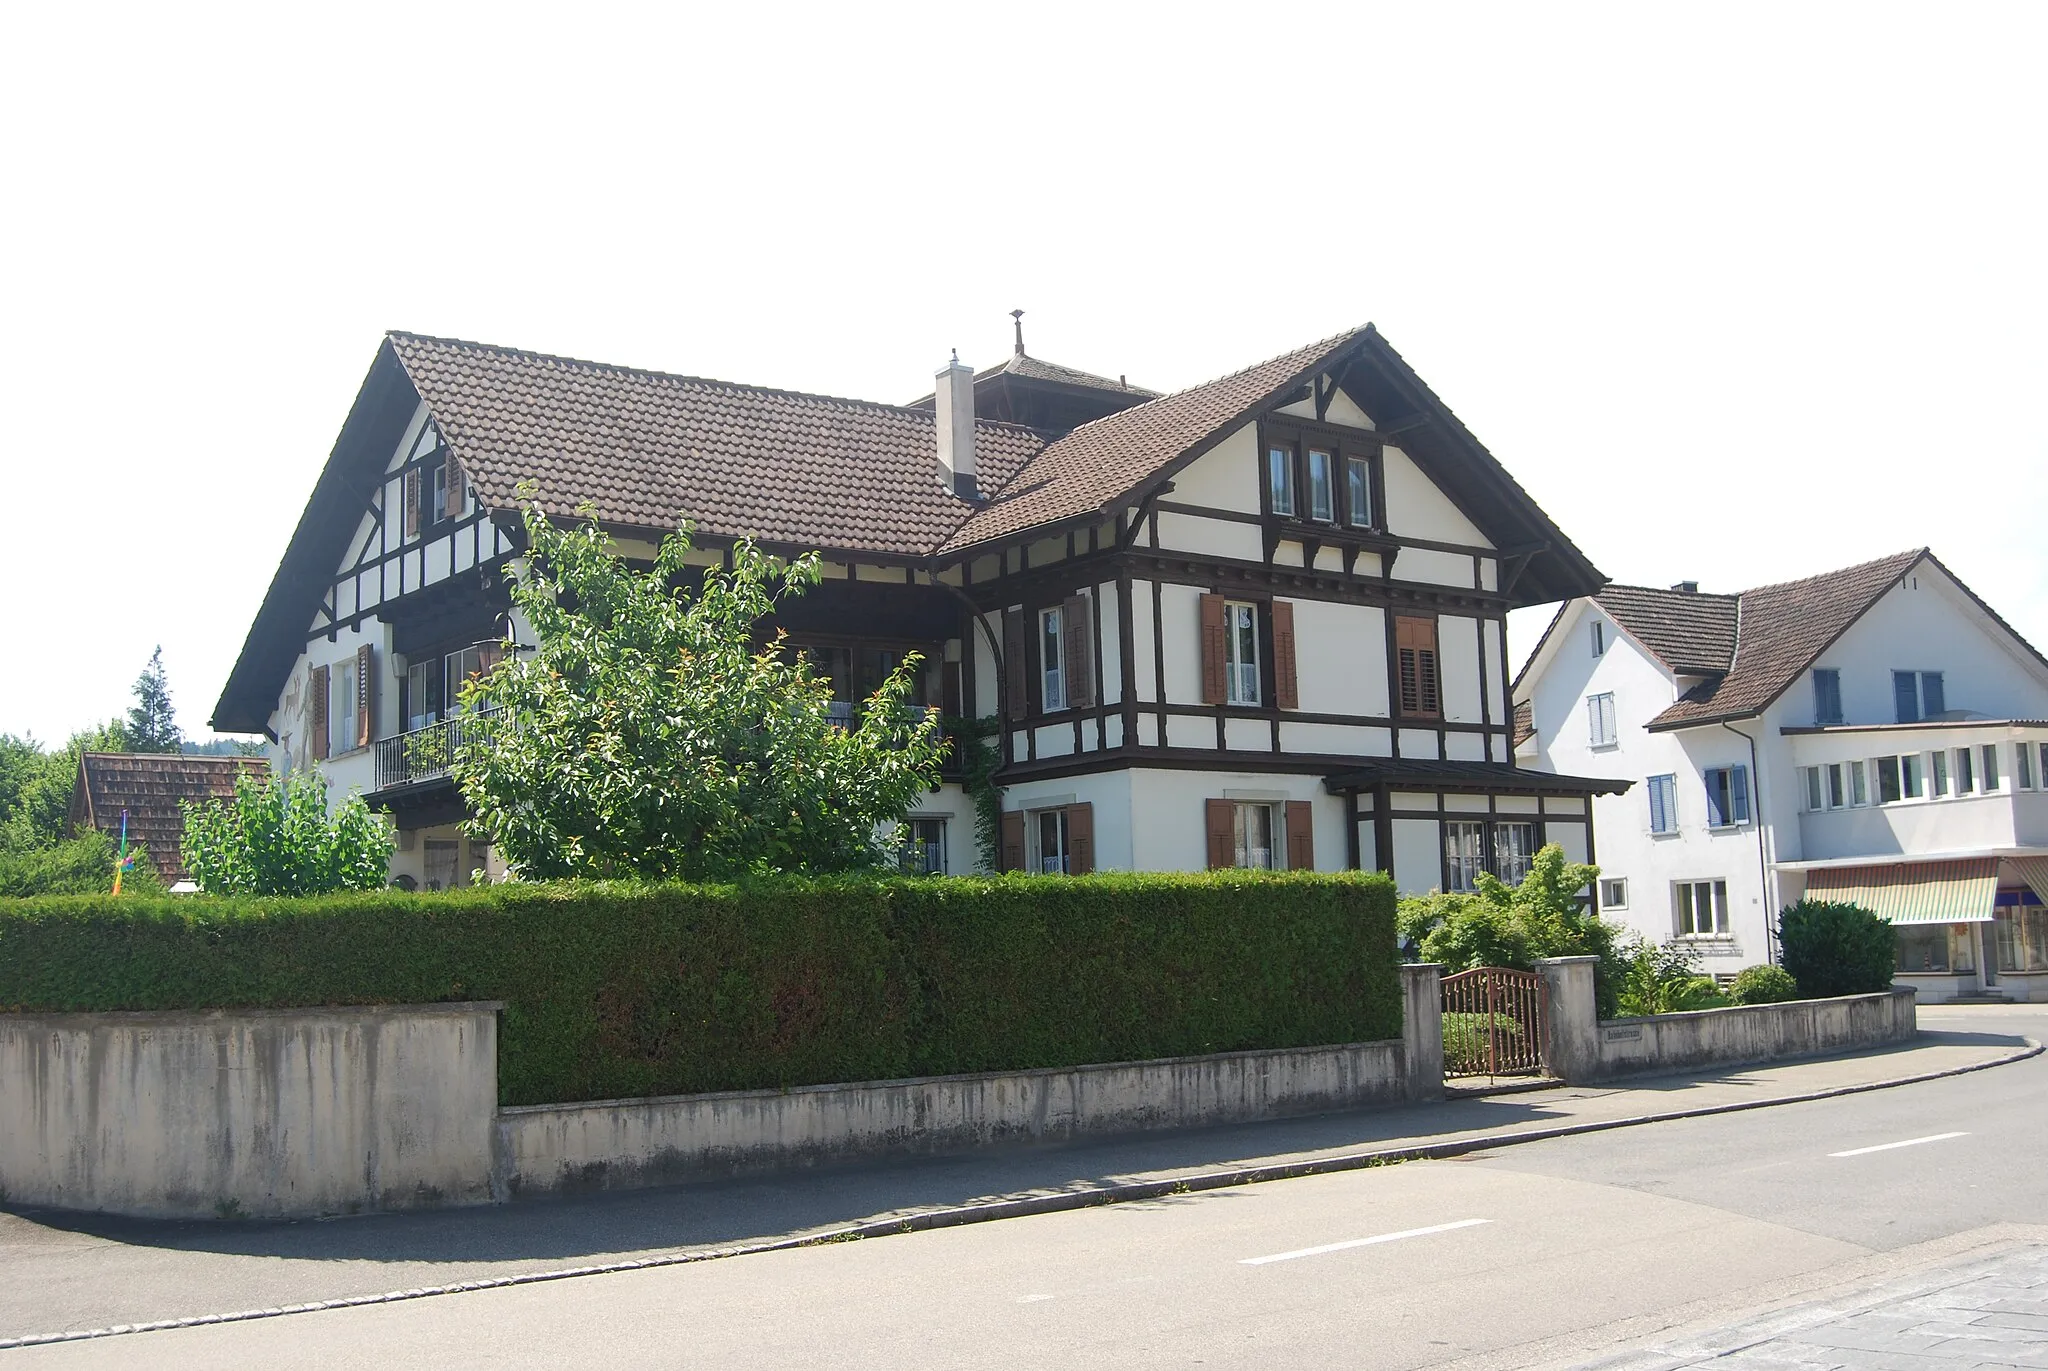 Photo showing: Timber framing house at Nebikon, canton of Luzern, Switzerland